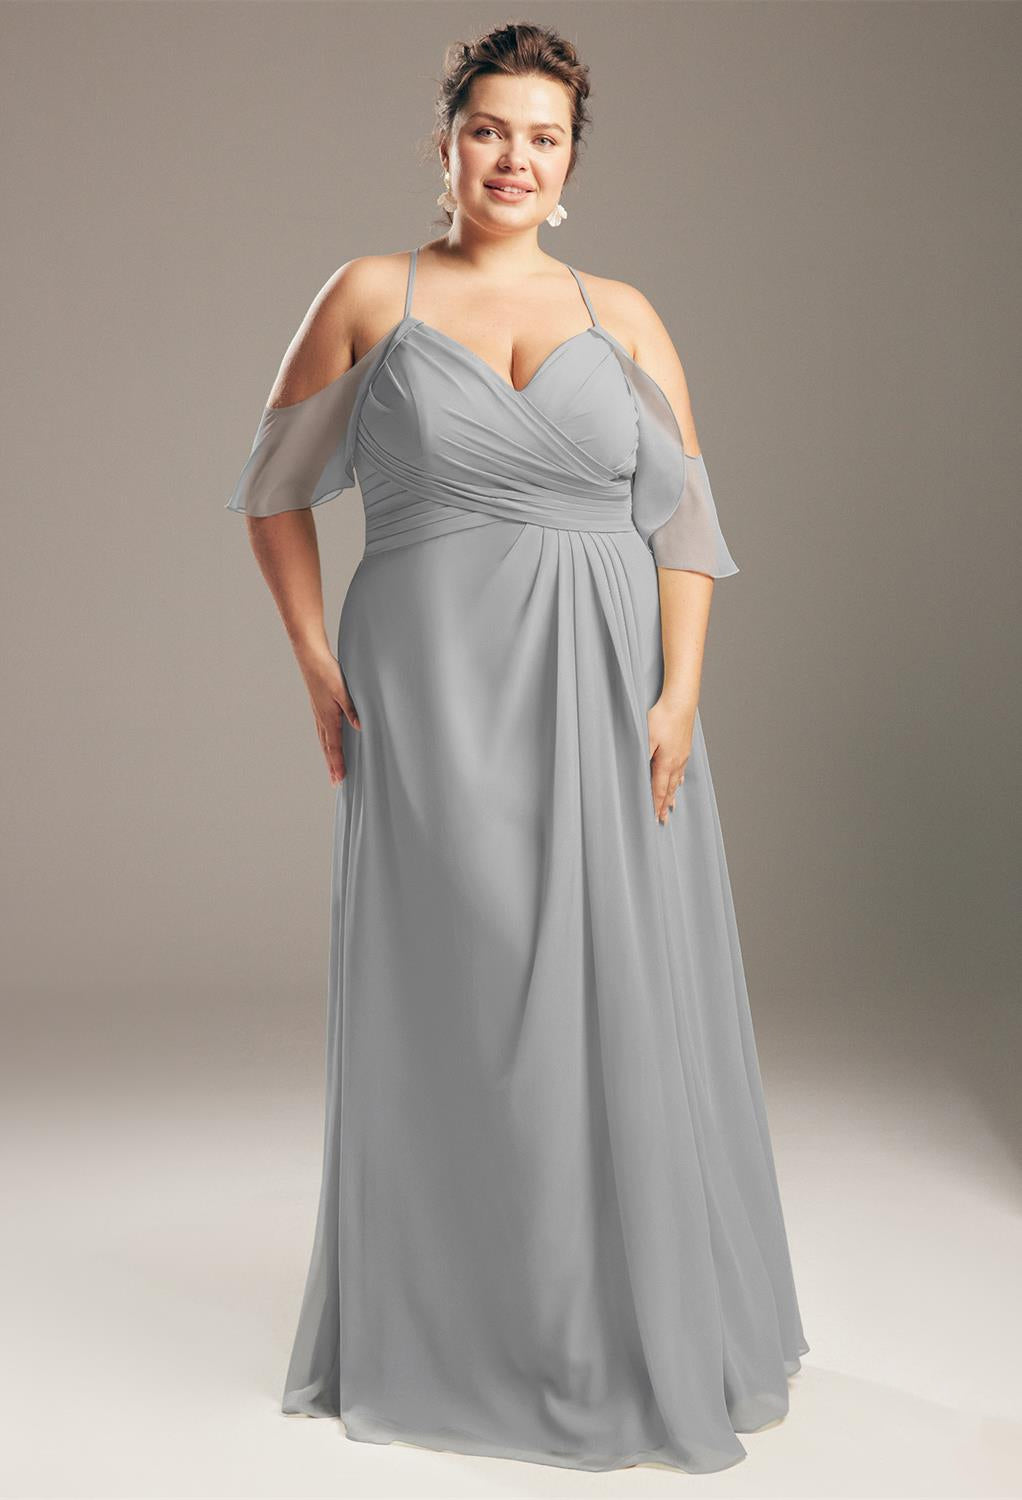 A plus size bridesmaid in a grey Jenifer - Chiffon Bridesmaid Dress - Off the Rack from Bergamot Bridal in London.